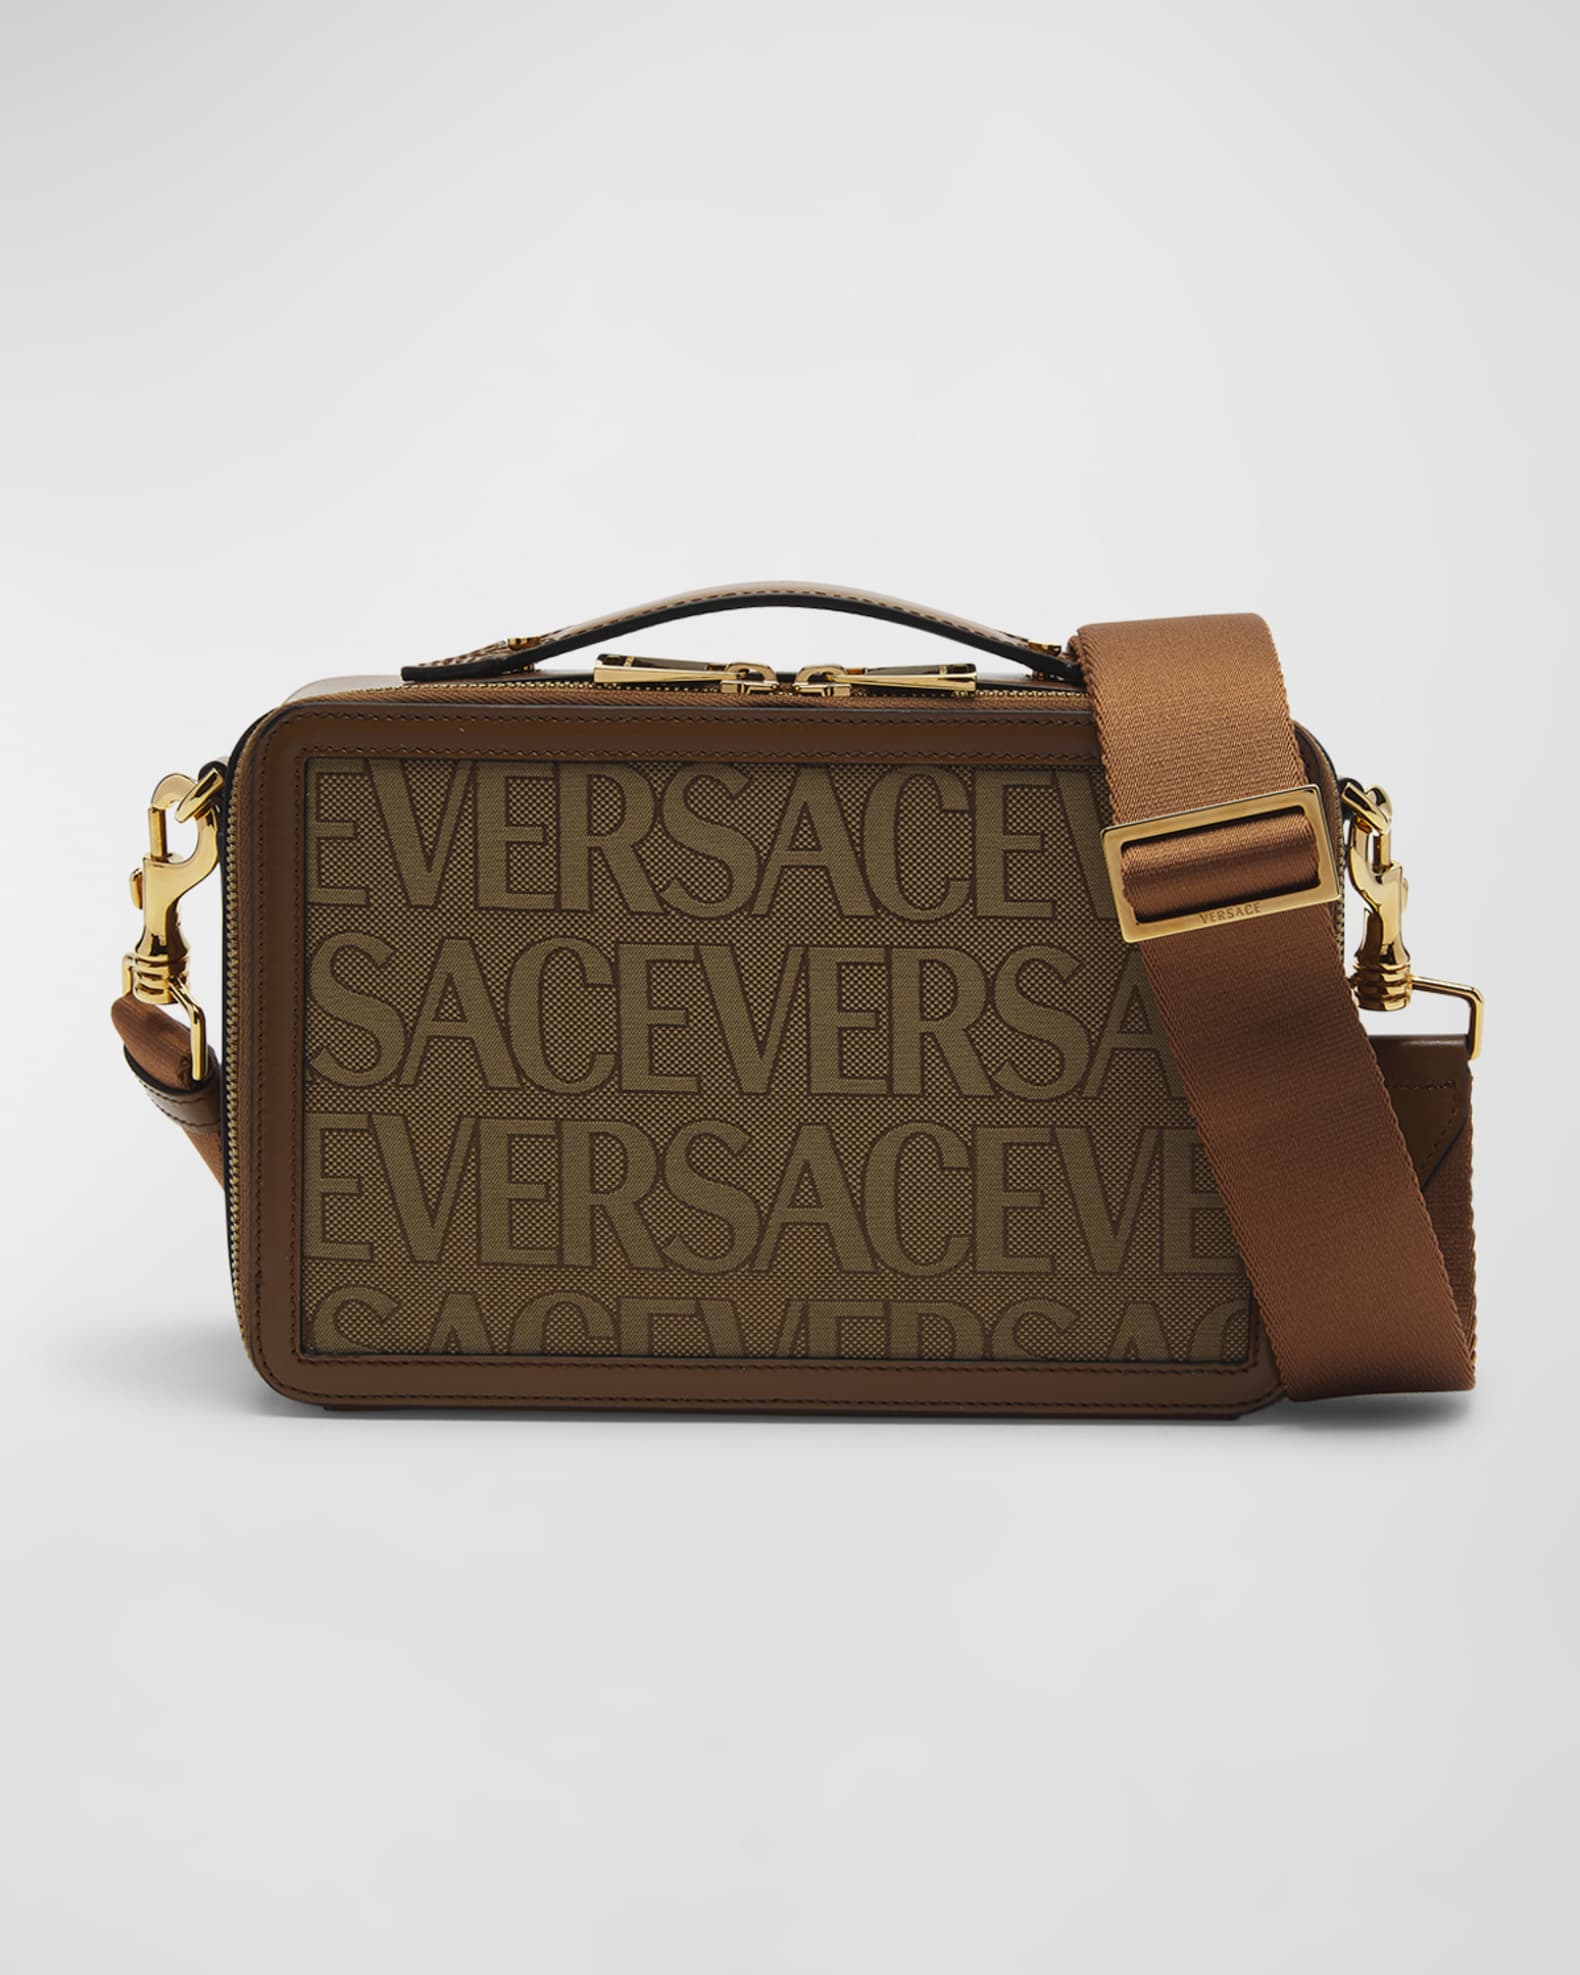 Versace Pouches - Men's Bags Collection